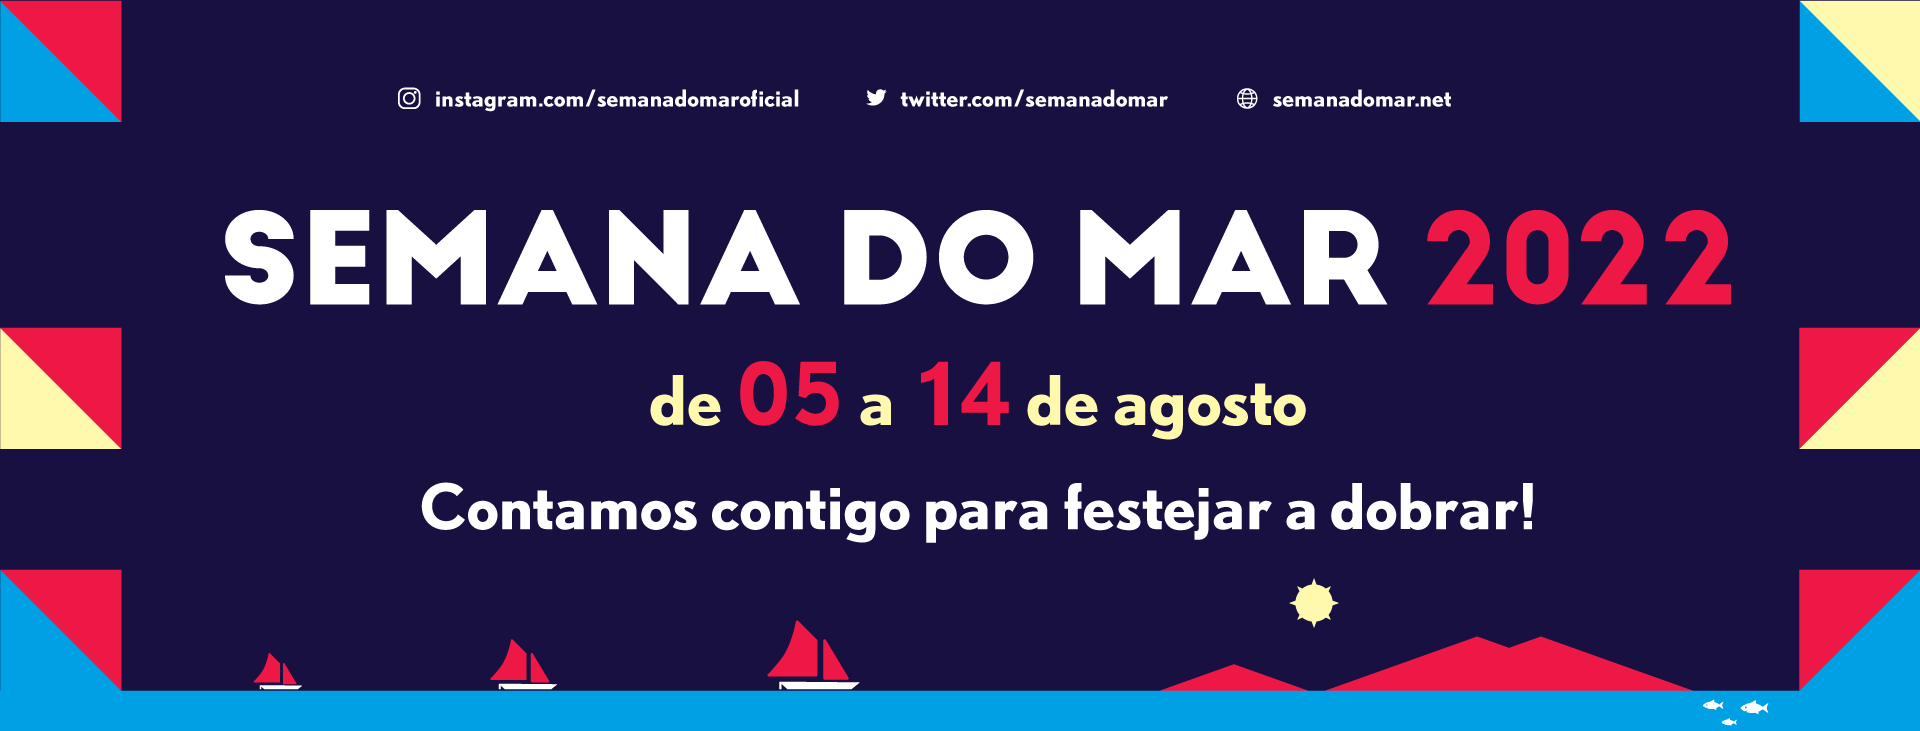 Semana do Mar 2022 Festival na Ilha do Faial Açores